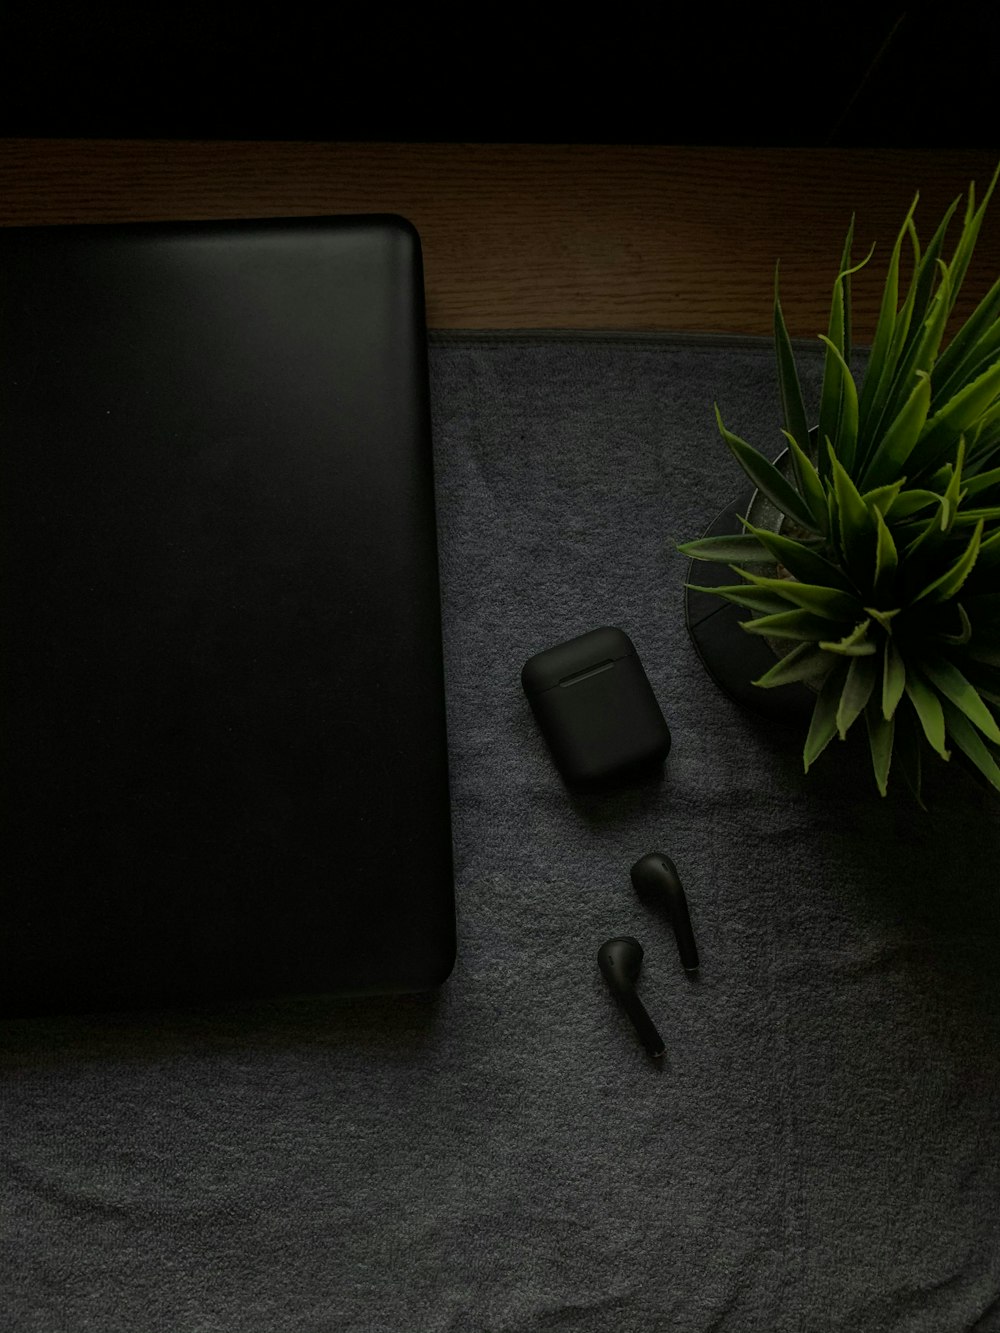 black bluetooth earbuds beside black laptop computer